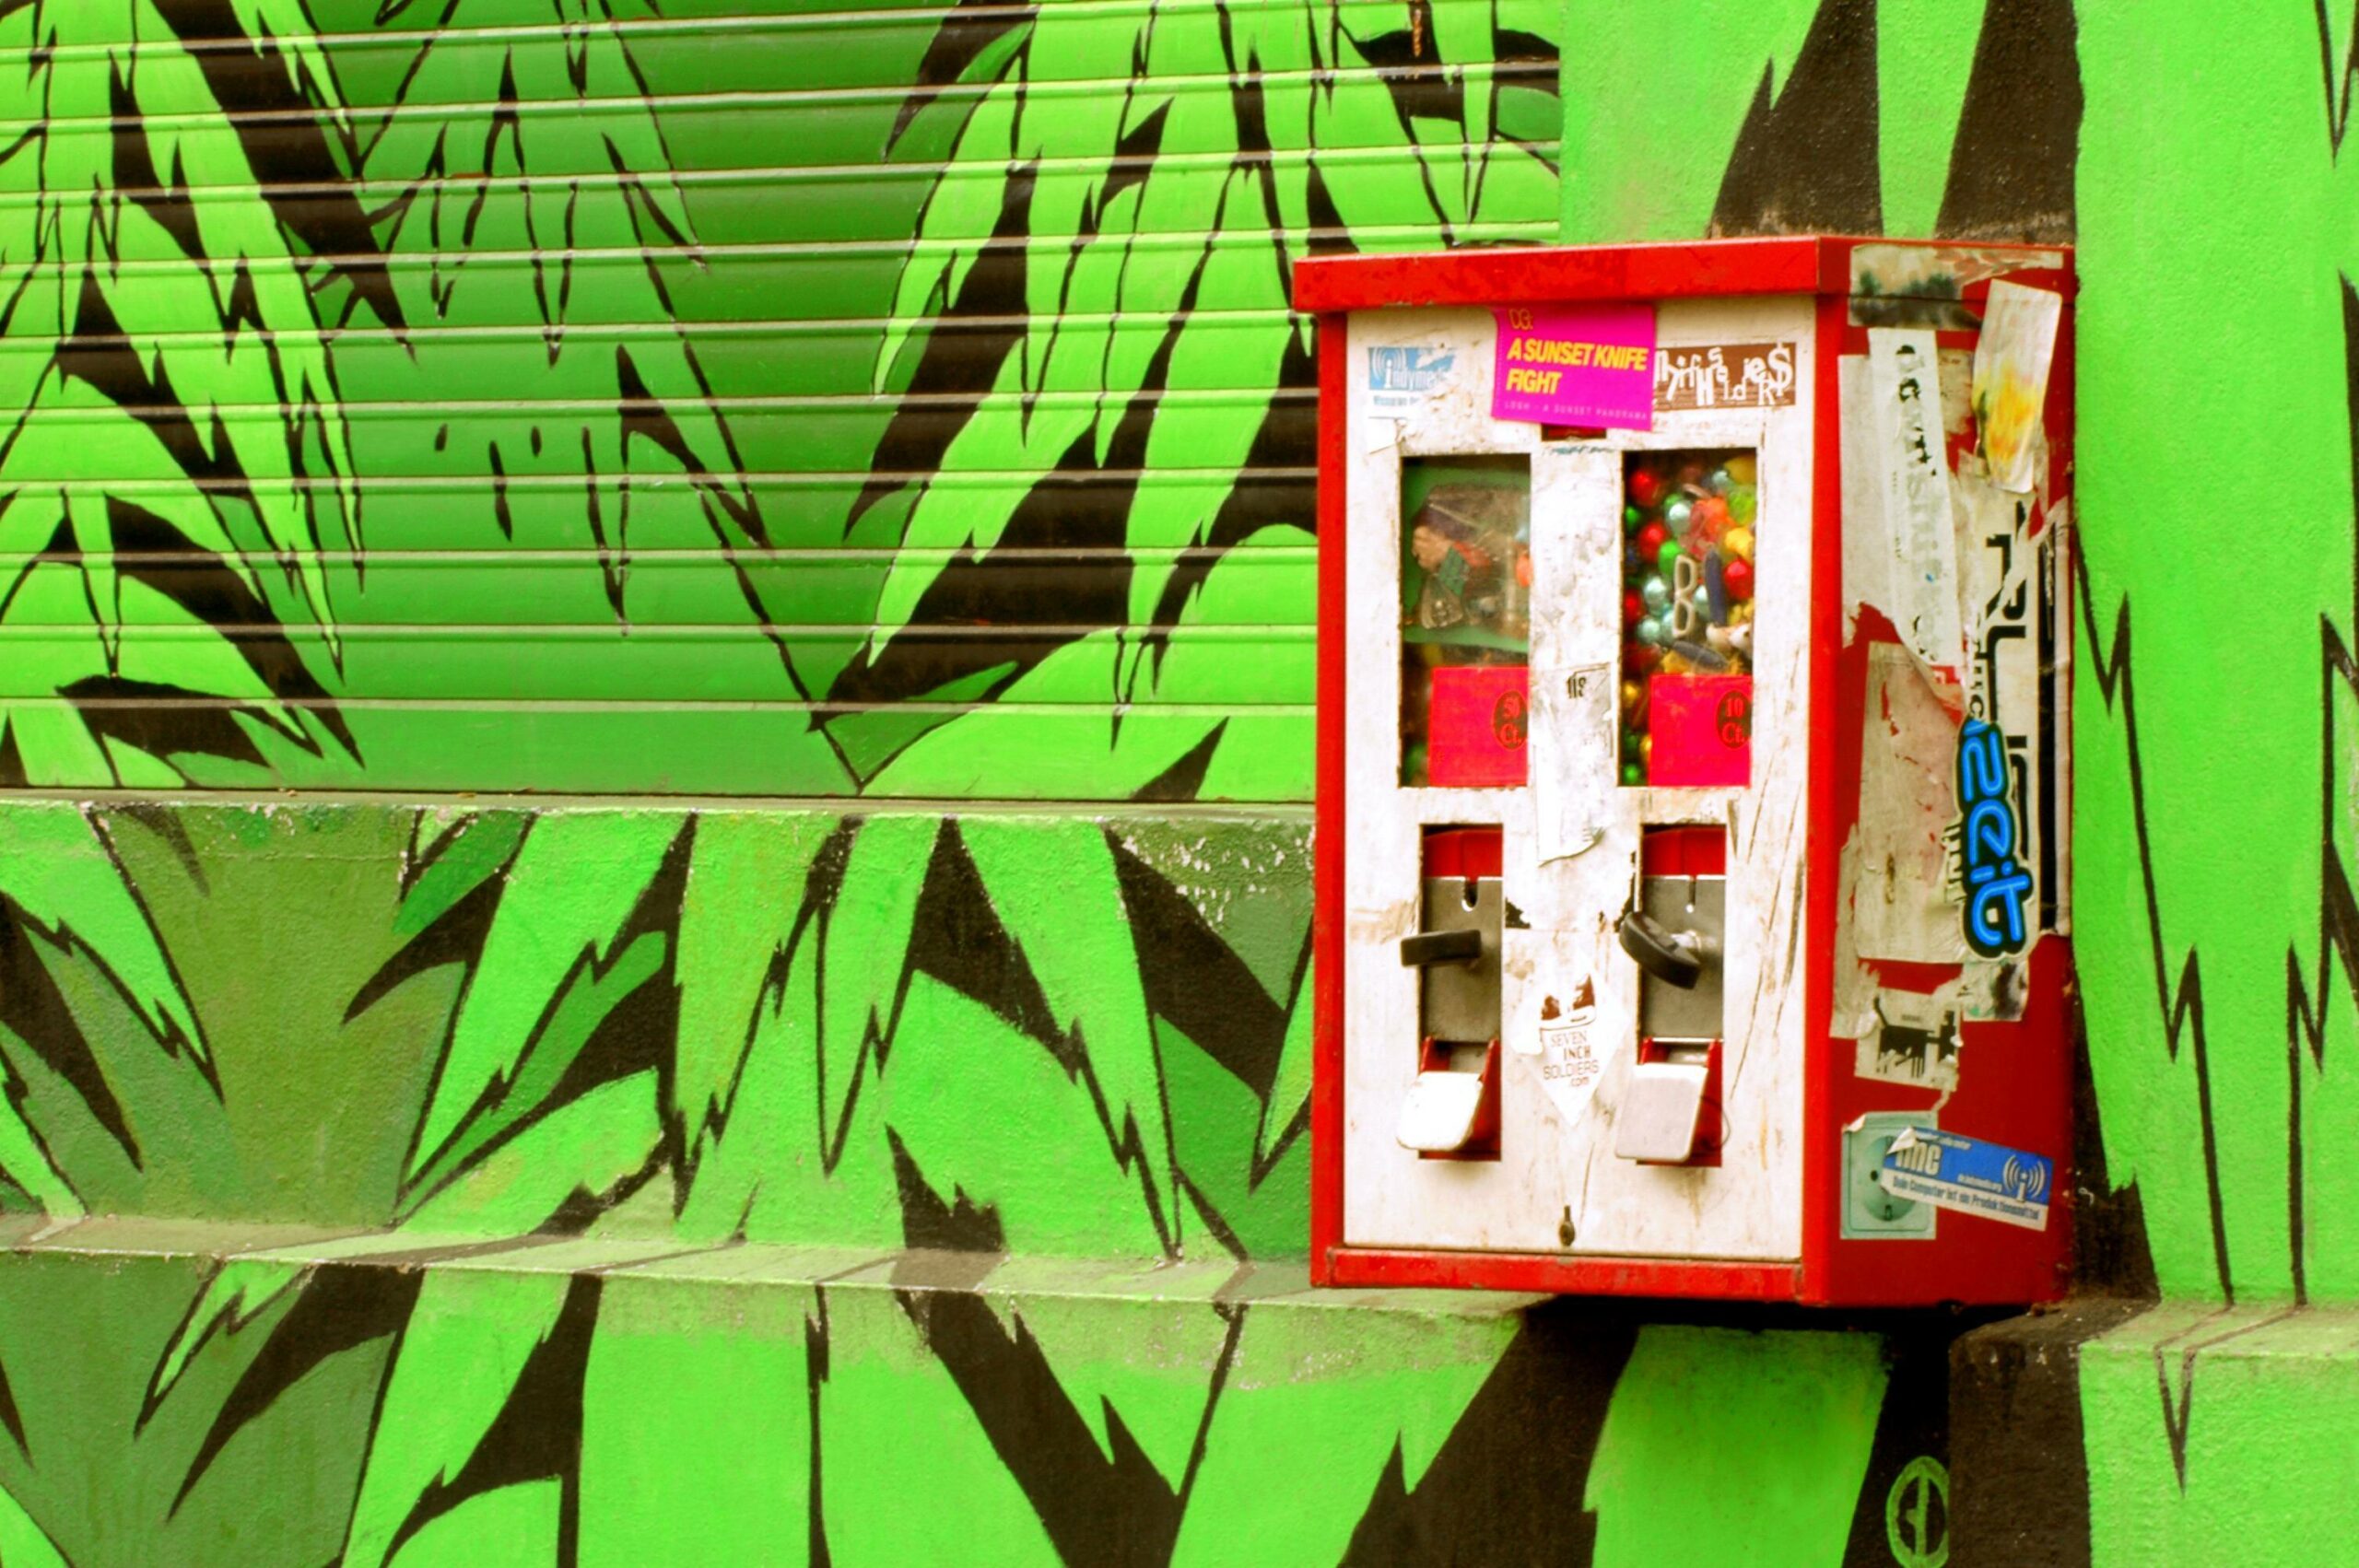 Kaugummiautomaten Berlin: Kaugummiautomat vor gemalten Hanfblättern in Berlin. Foto: Imago/Steinach